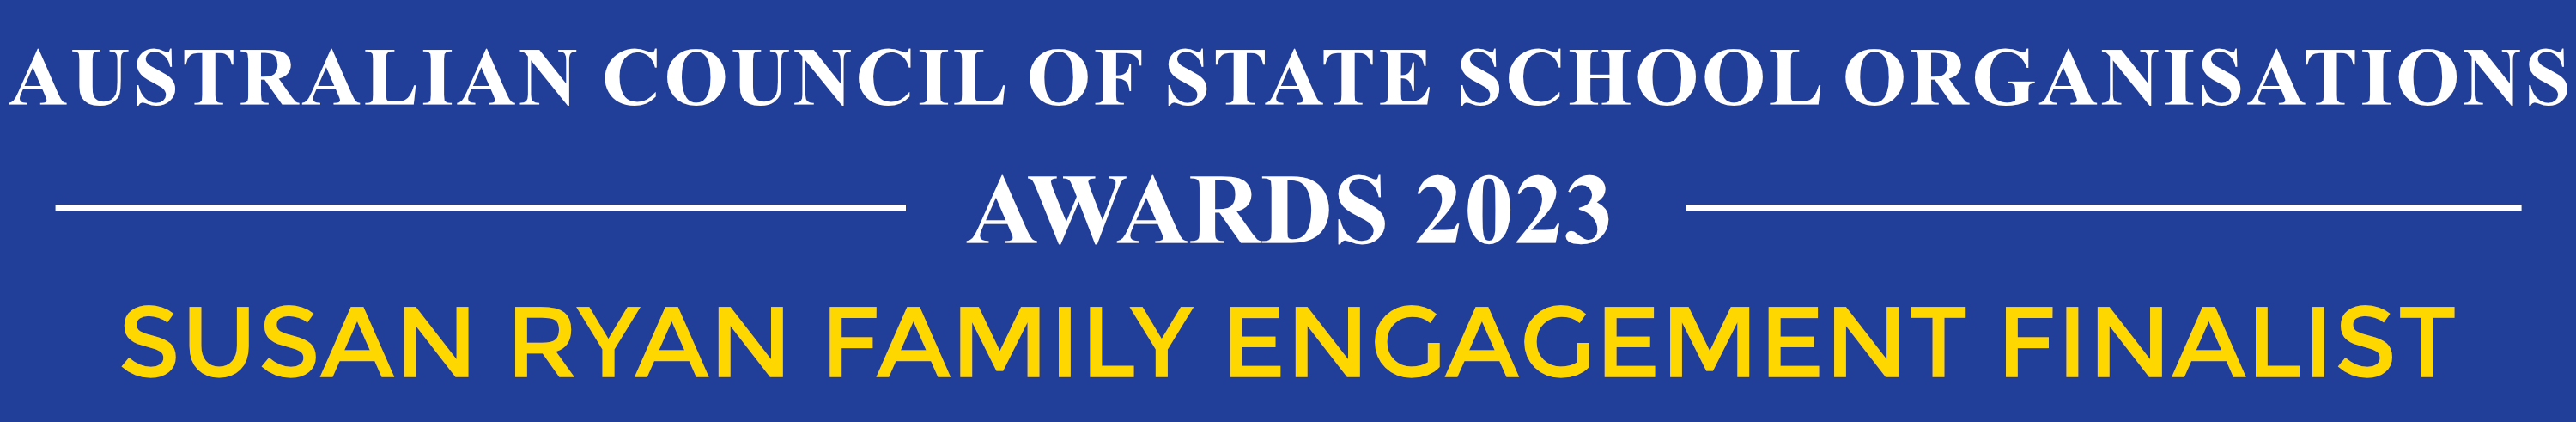 Australian Council of State School Organisations Awards 2023 - Susan Ryan Family Engagement Finalist